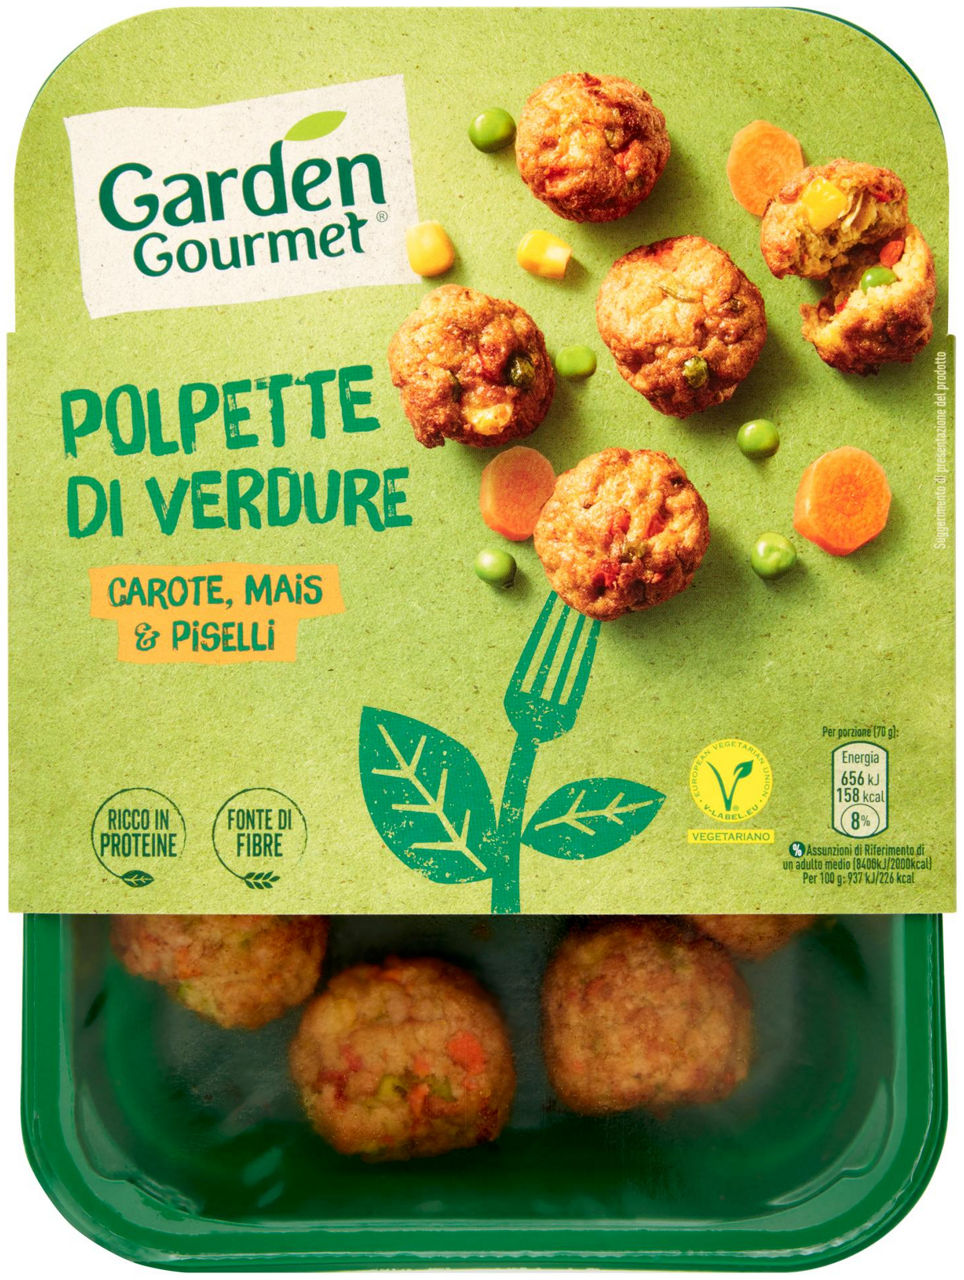 Polpette con verdure garden gourmet g 200